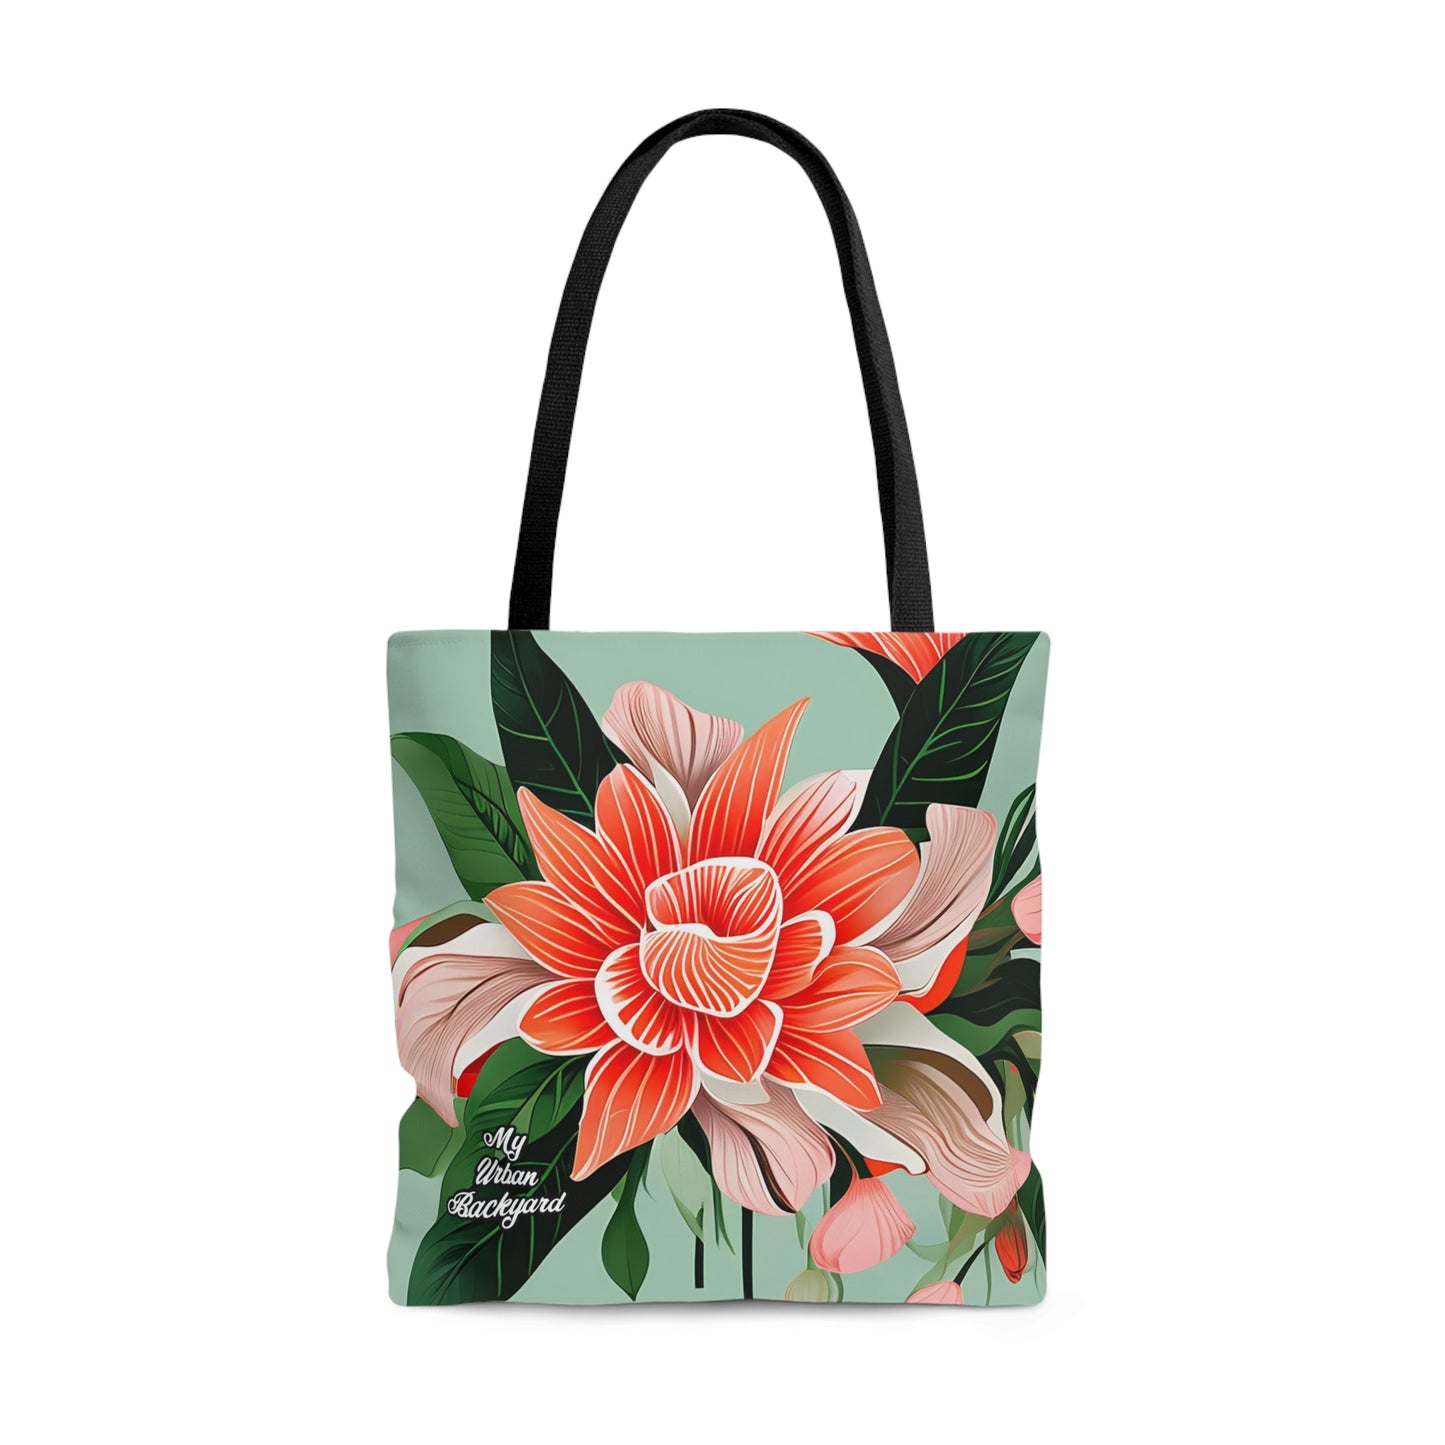 Reusable Tote Bag for Everyday Use, Shoulder Bag w Cotton Handles - Large Flower